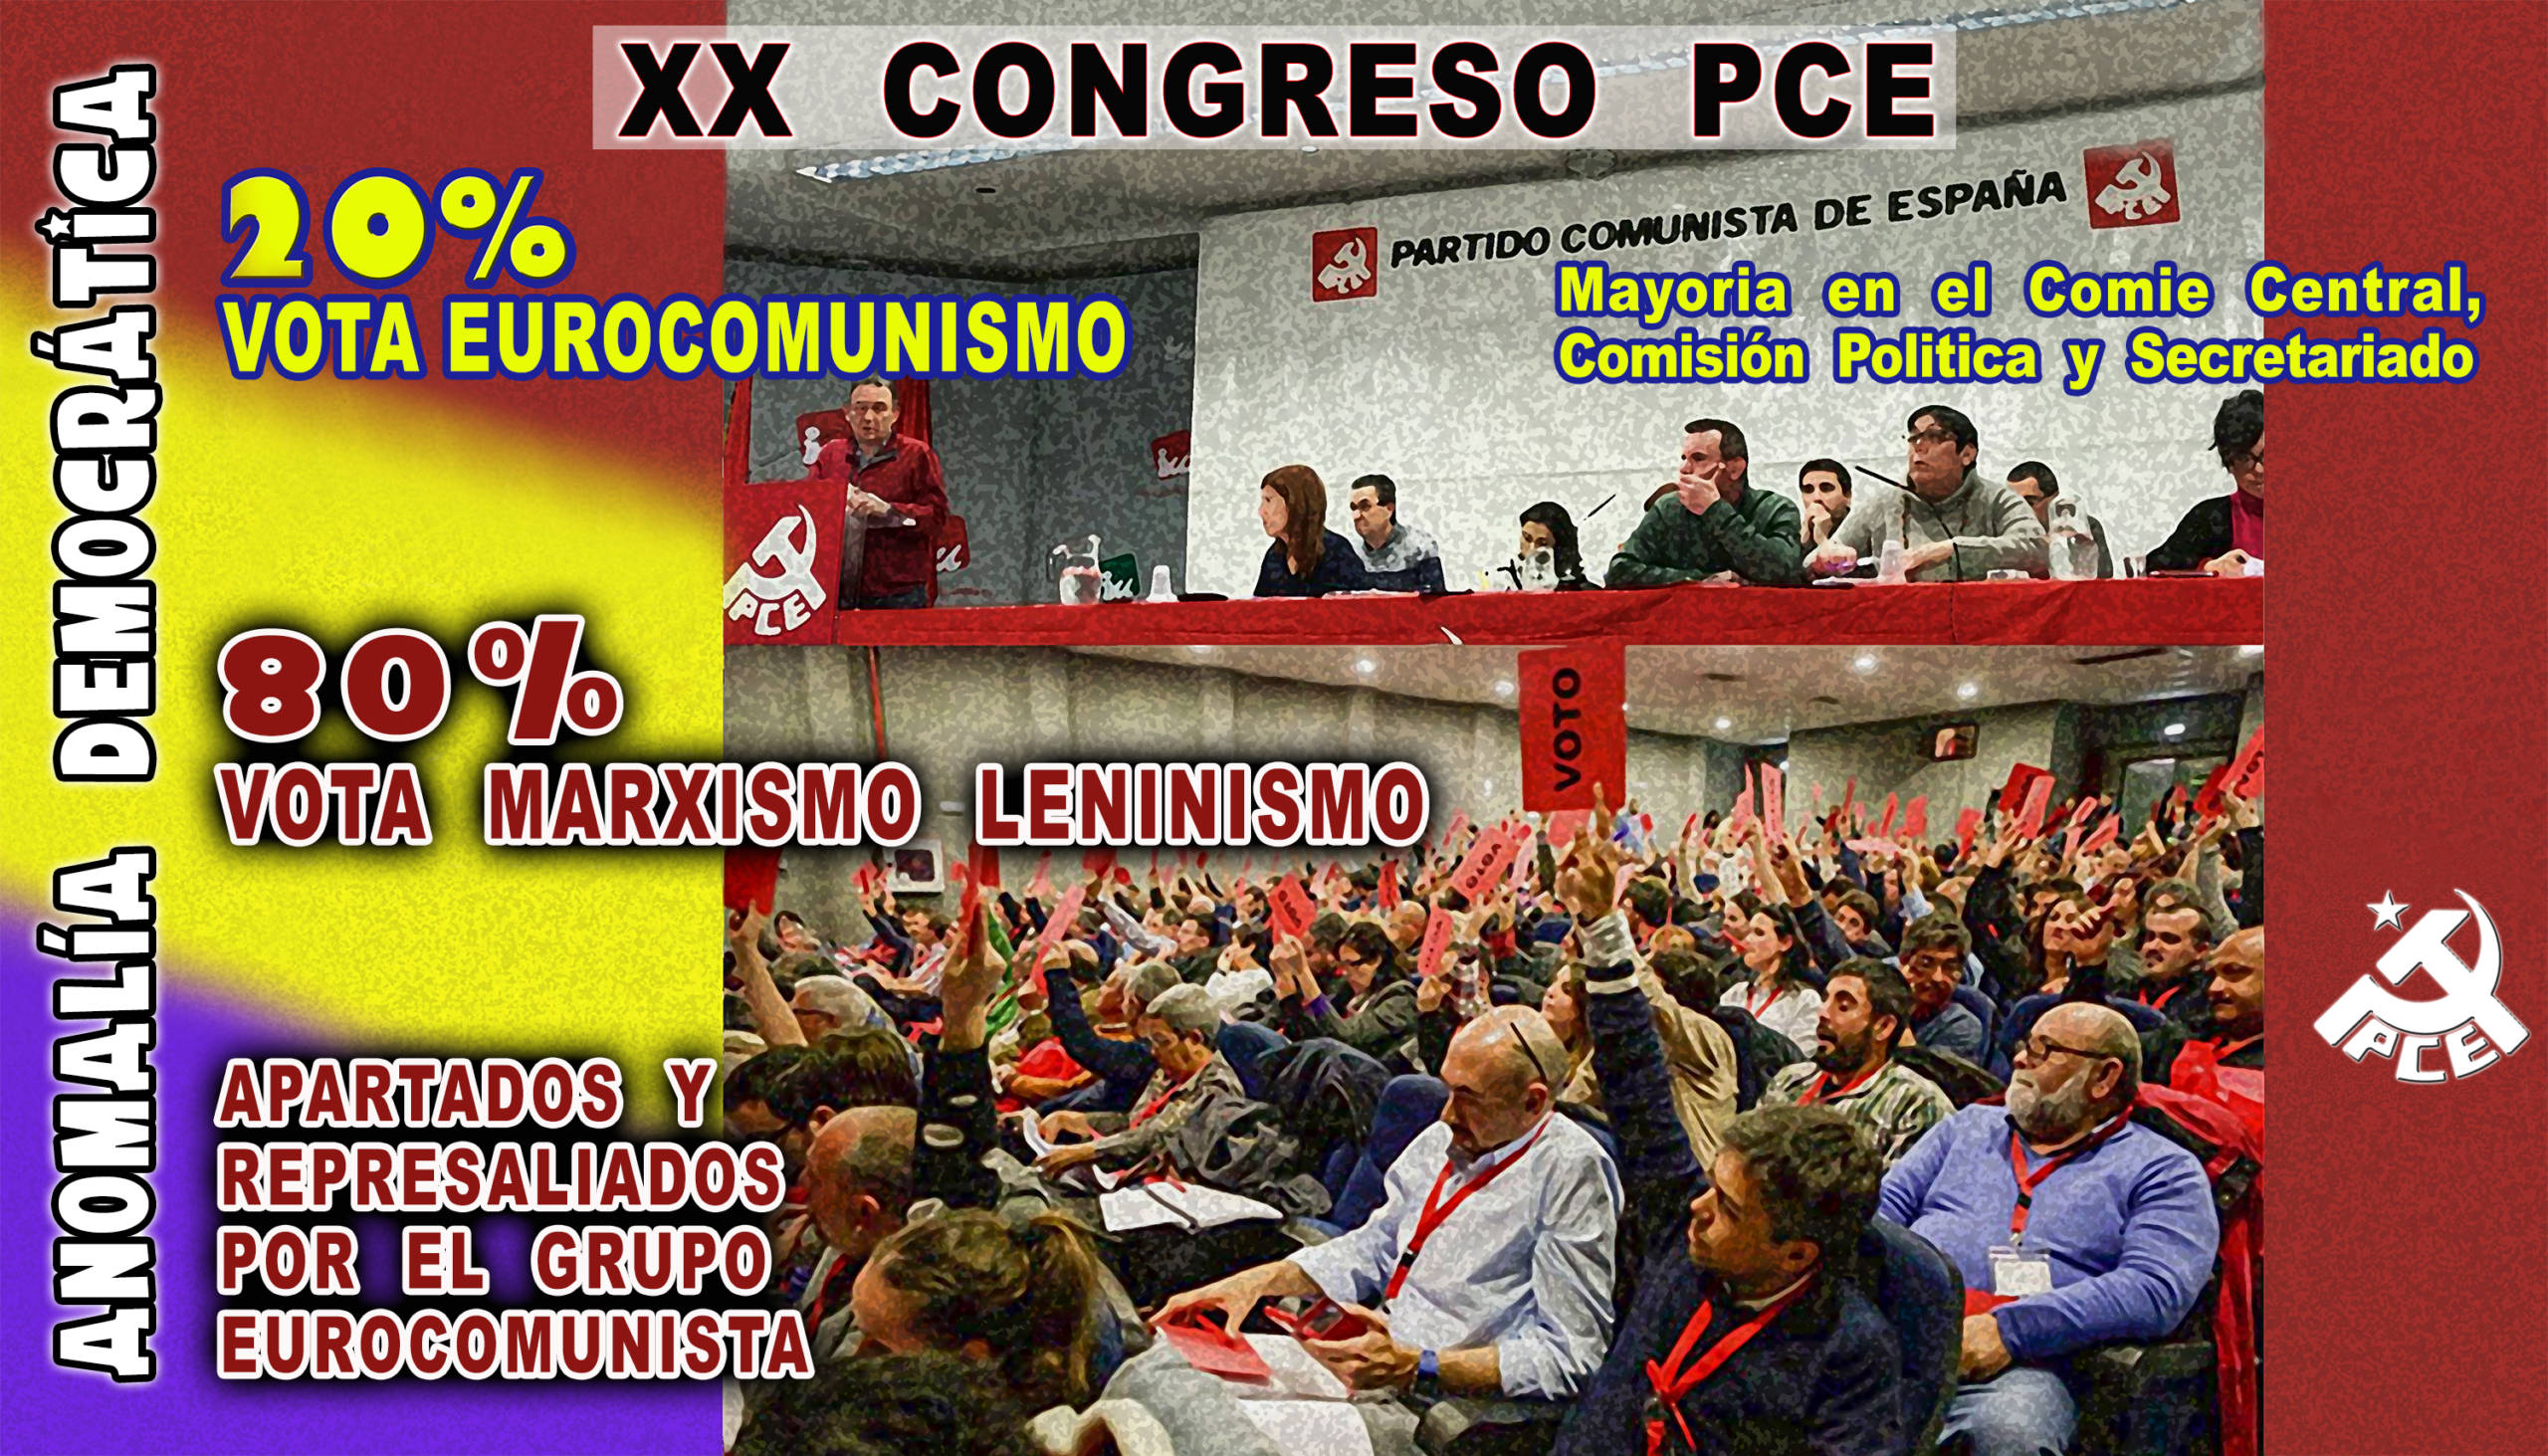 Ilustración XX Congreso PCE. Autor Fernando Francisco Serrano